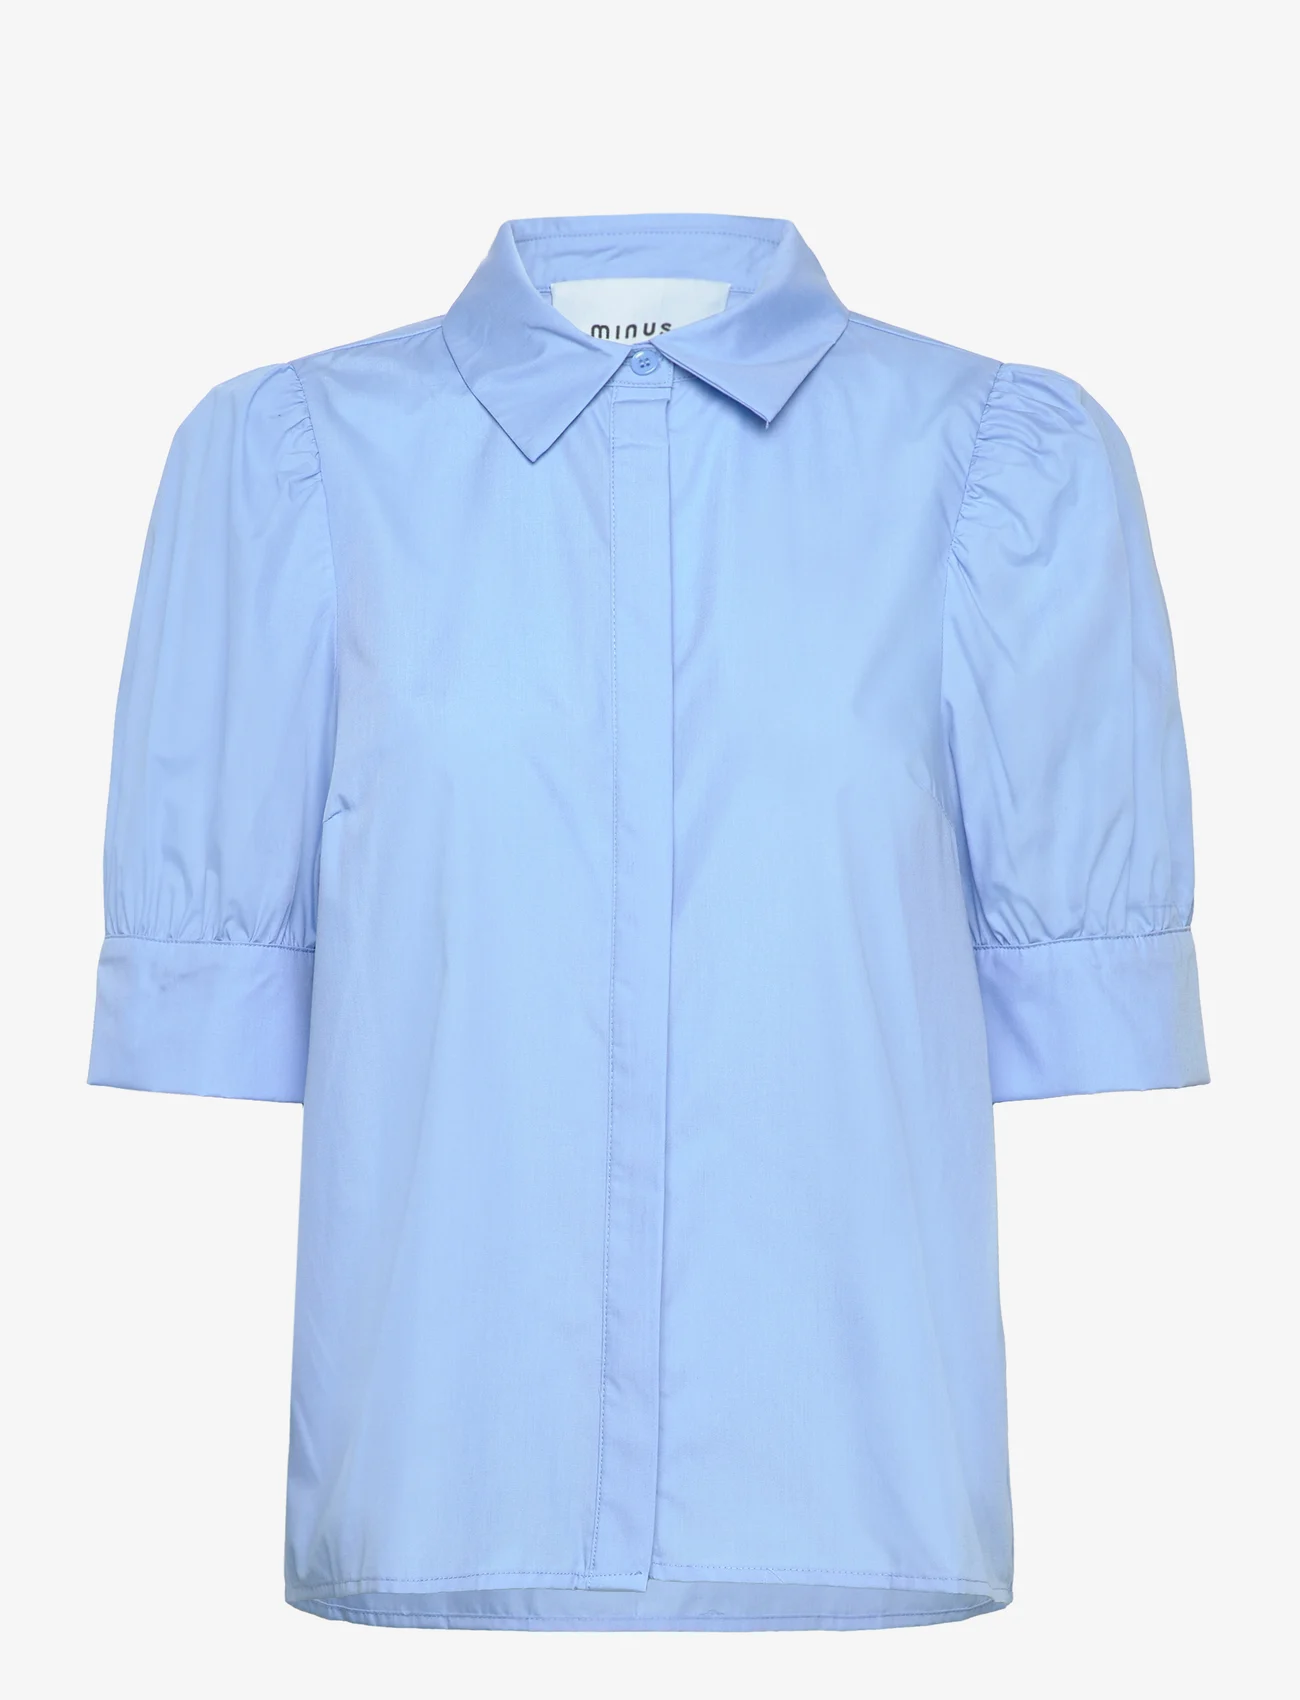 Minus - Molia Skjorte - kurzärmlige hemden - blue bonnet - 0